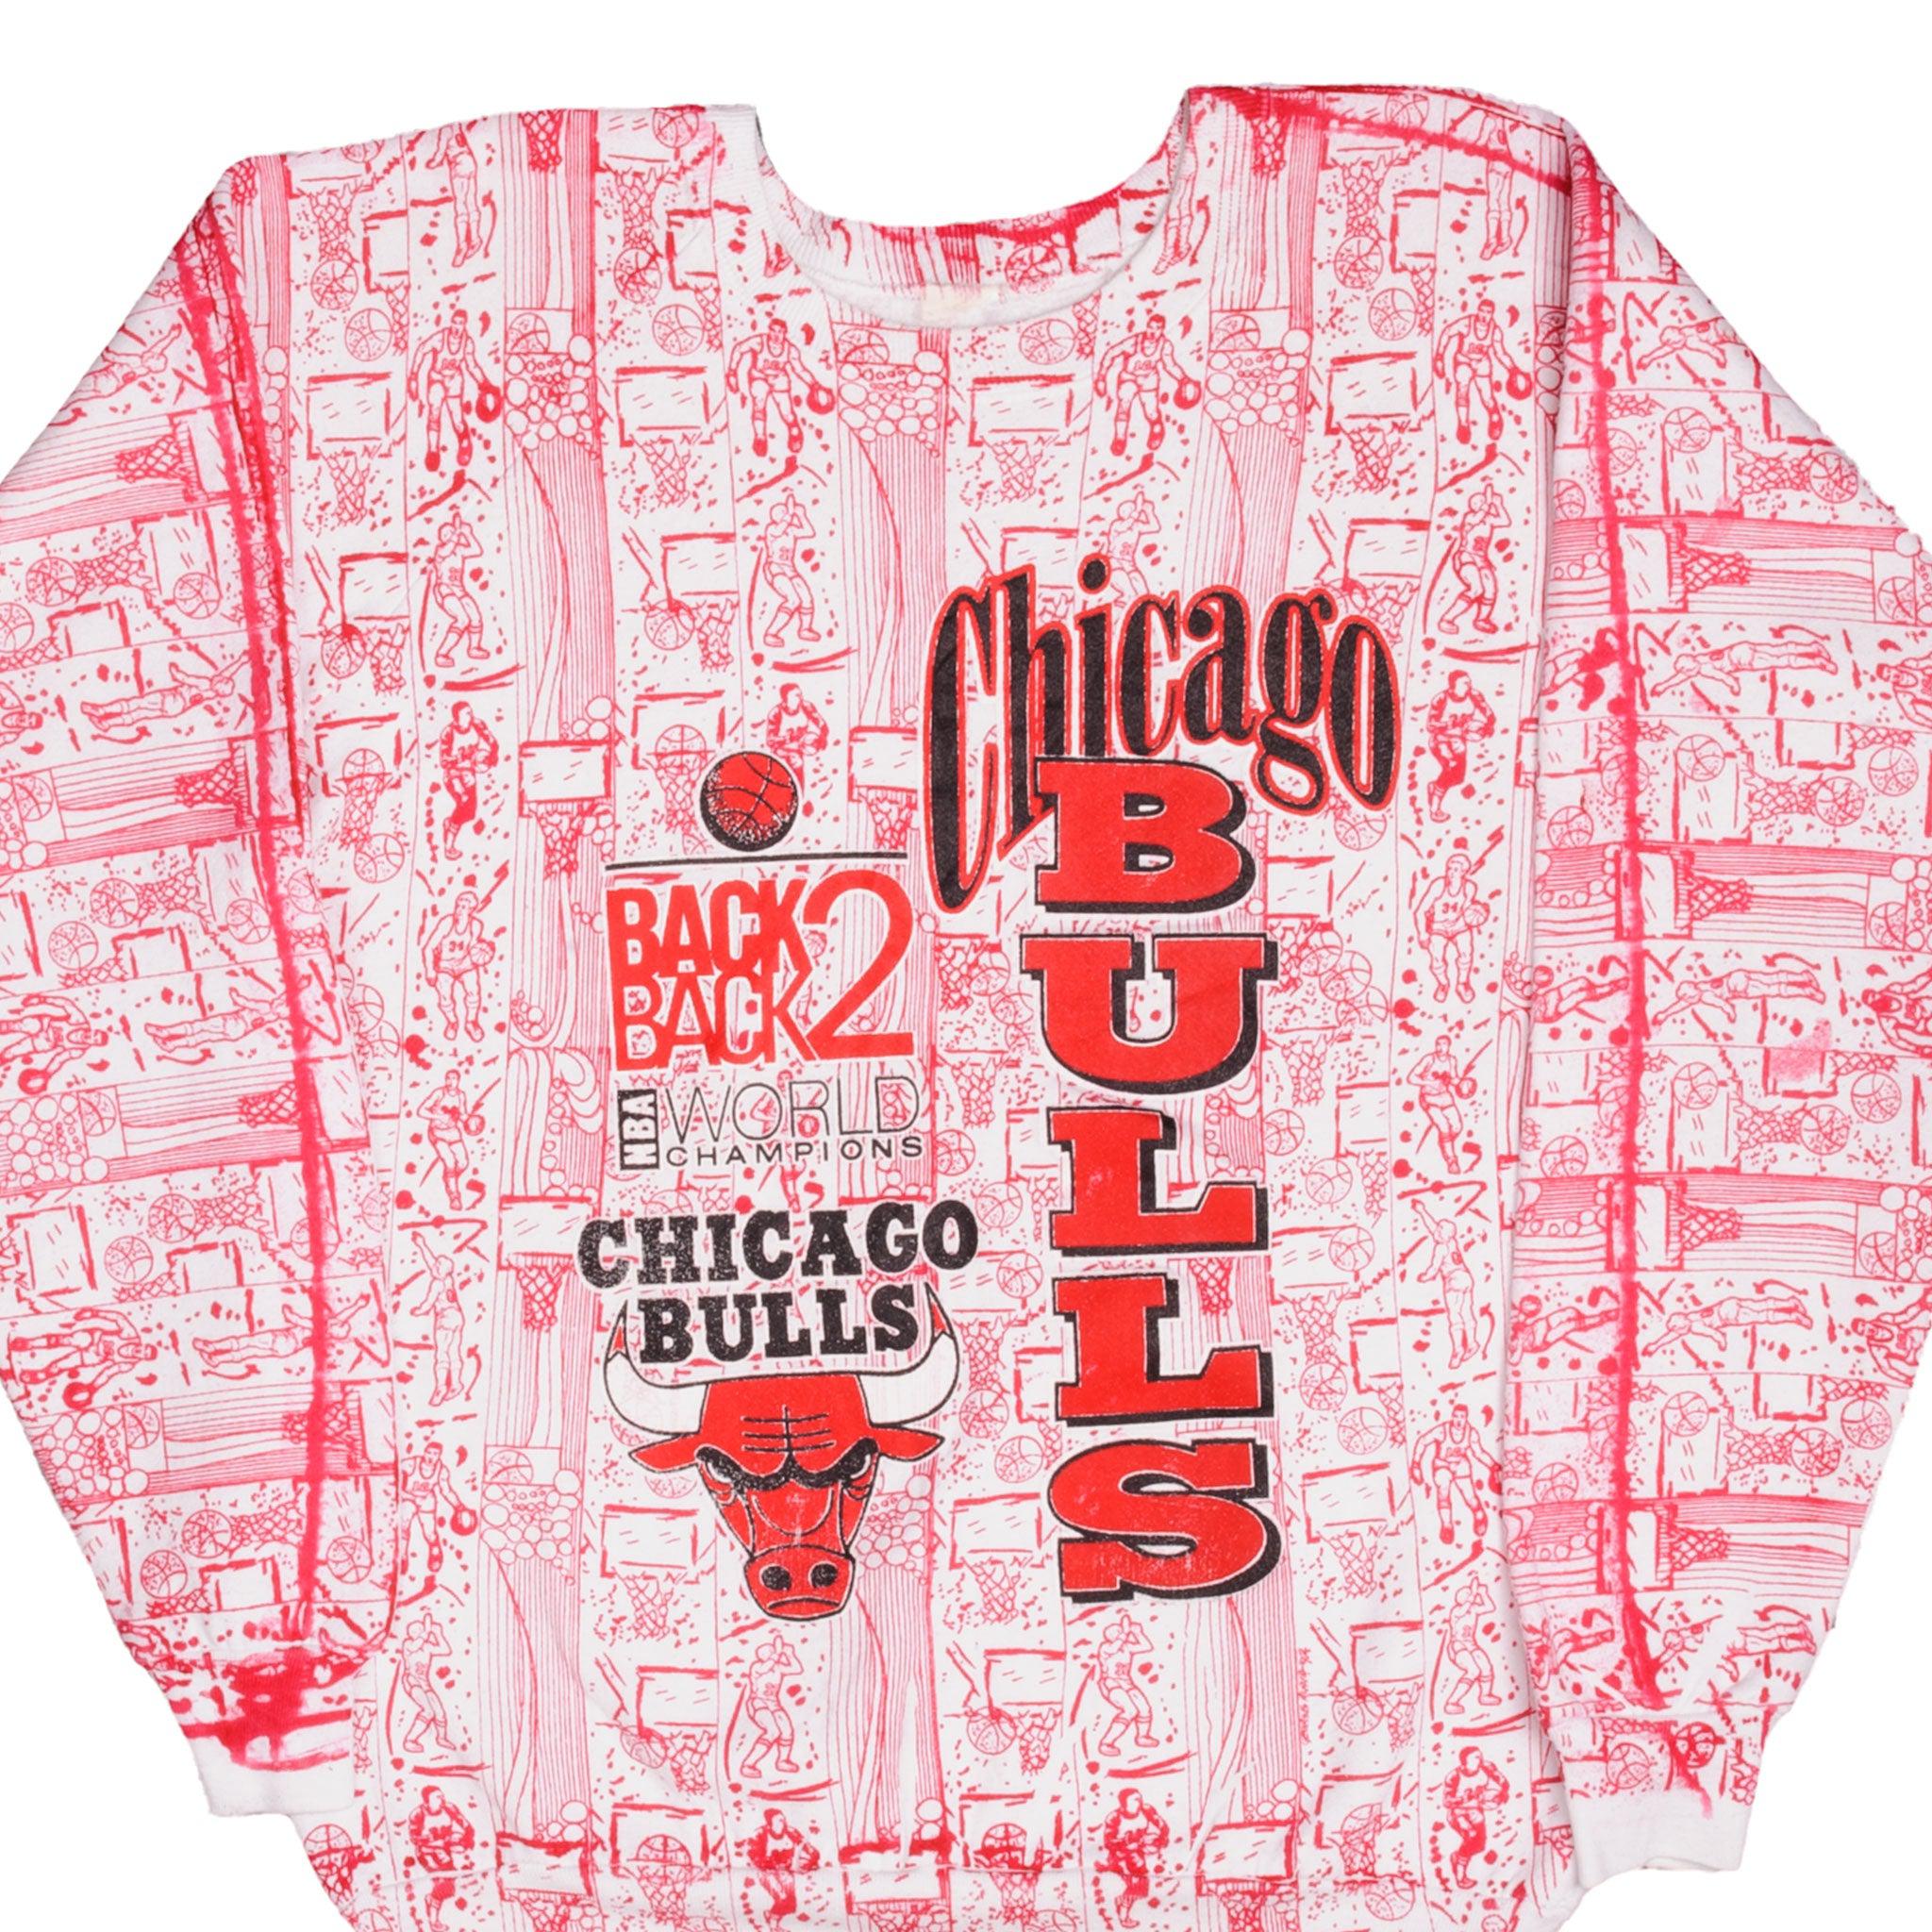 Trench USA Vintage Chicago Bulls Shirt 1992 NBA Chicago Bulls Back 2 Back Champions T-Shirt. Large